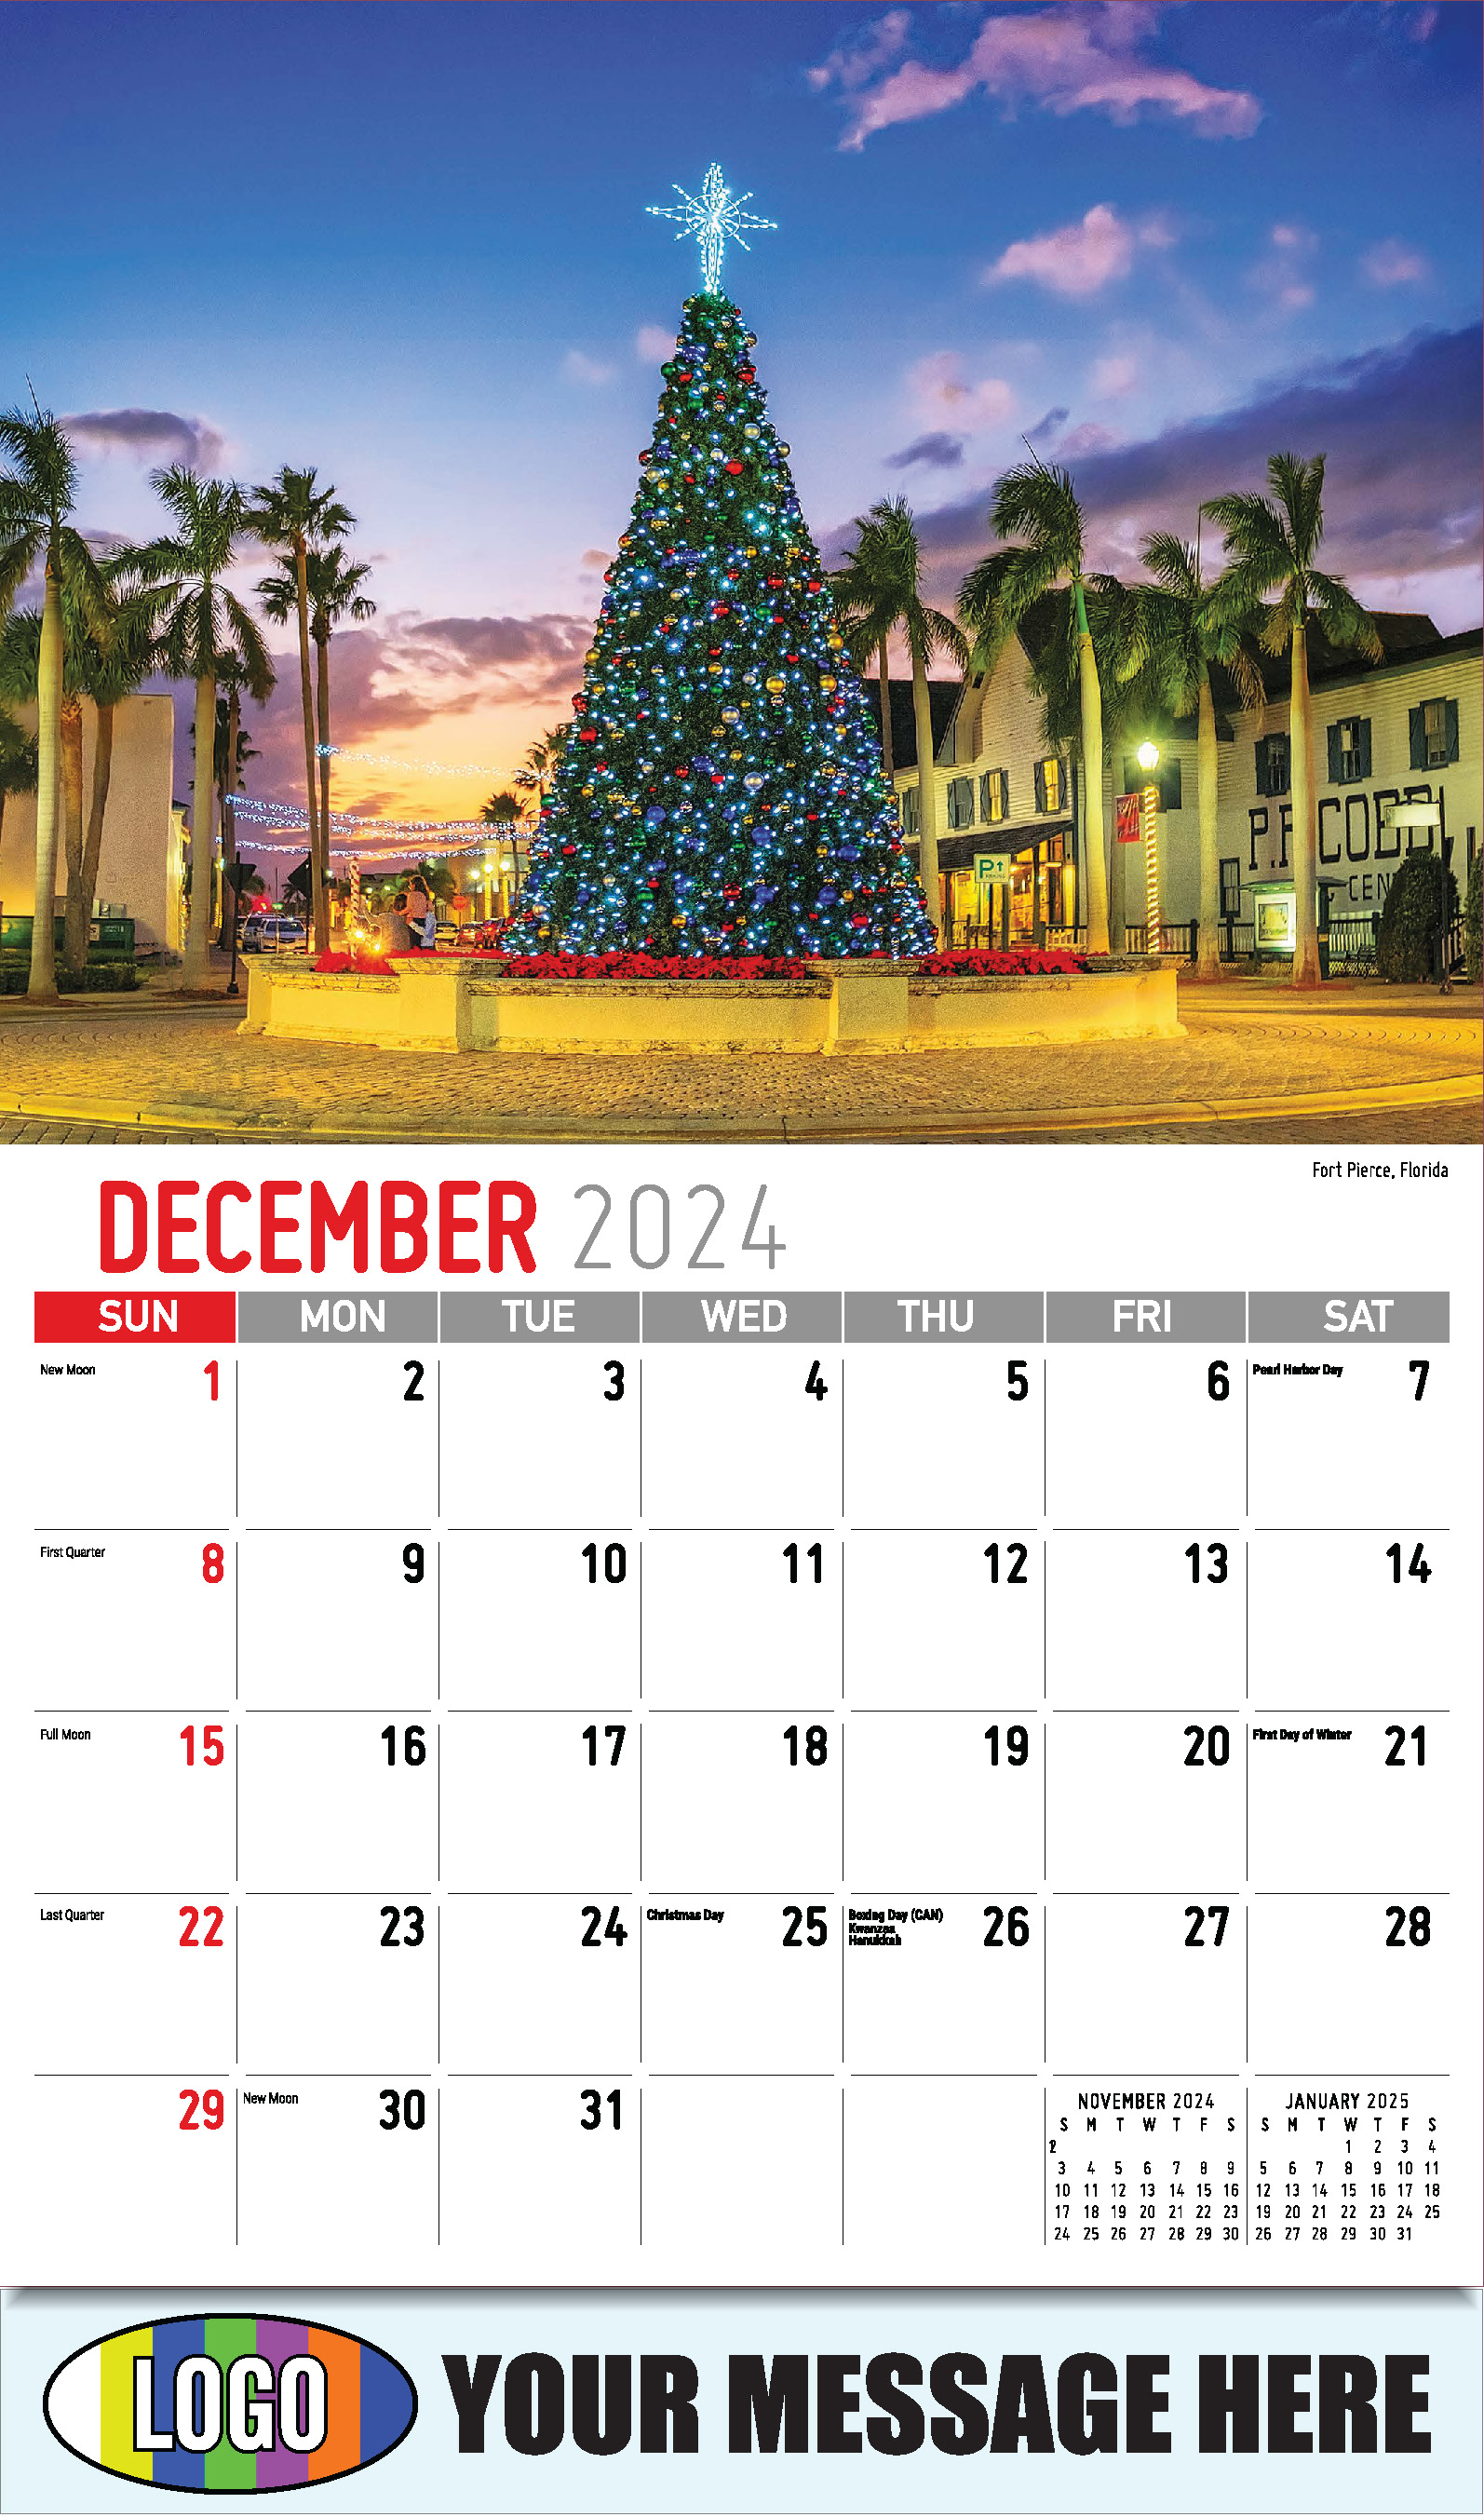 Scenes of Southeast USA 2025 Business Promo Wall Calendar - December_a